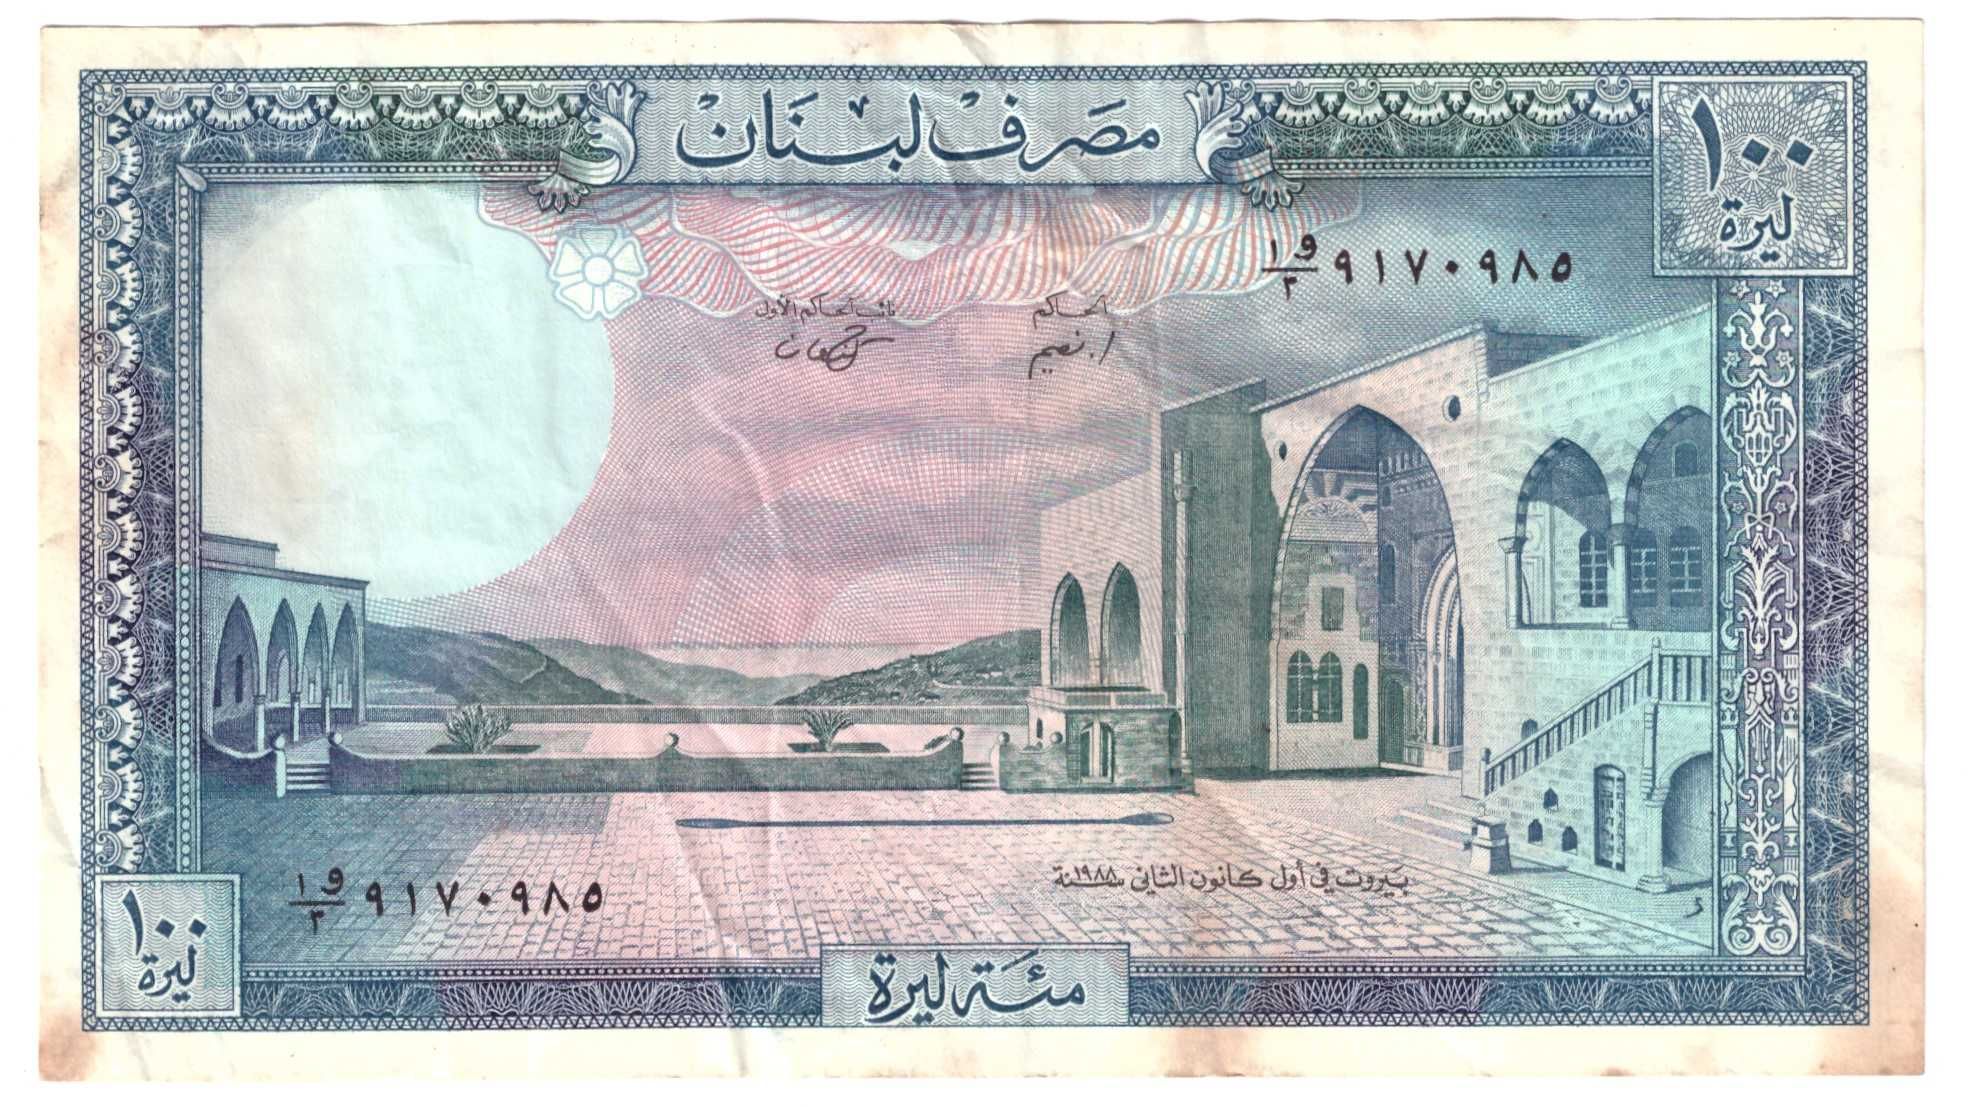 Liban, banknot 100 livres 1964-88 - st. 3